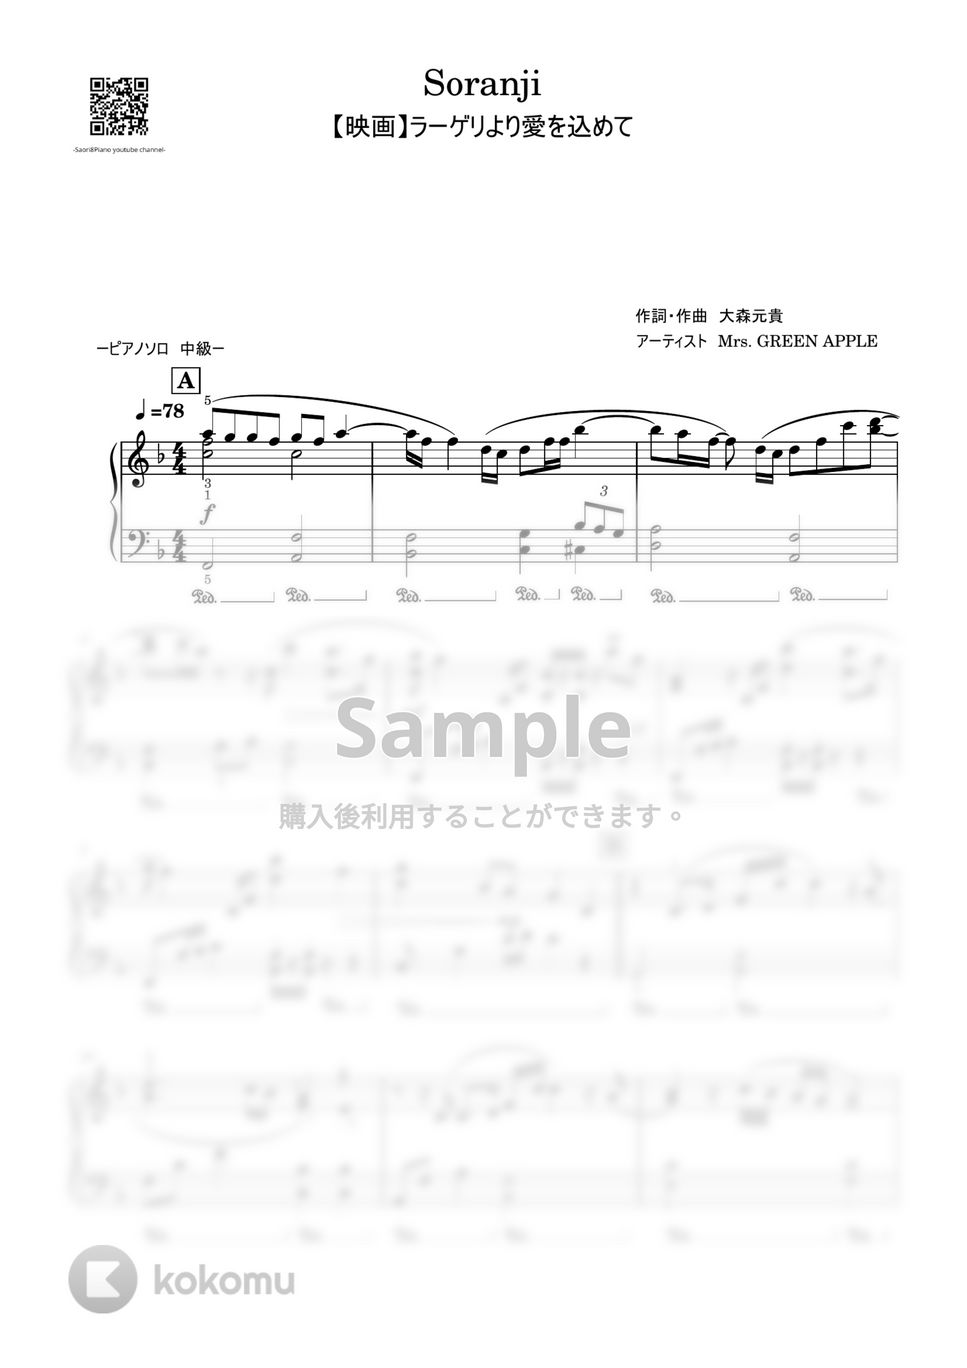 Mrs.GREEN APPLE - Soranji (ラーゲリより愛を込めて/中級レベル) by Saori8Piano